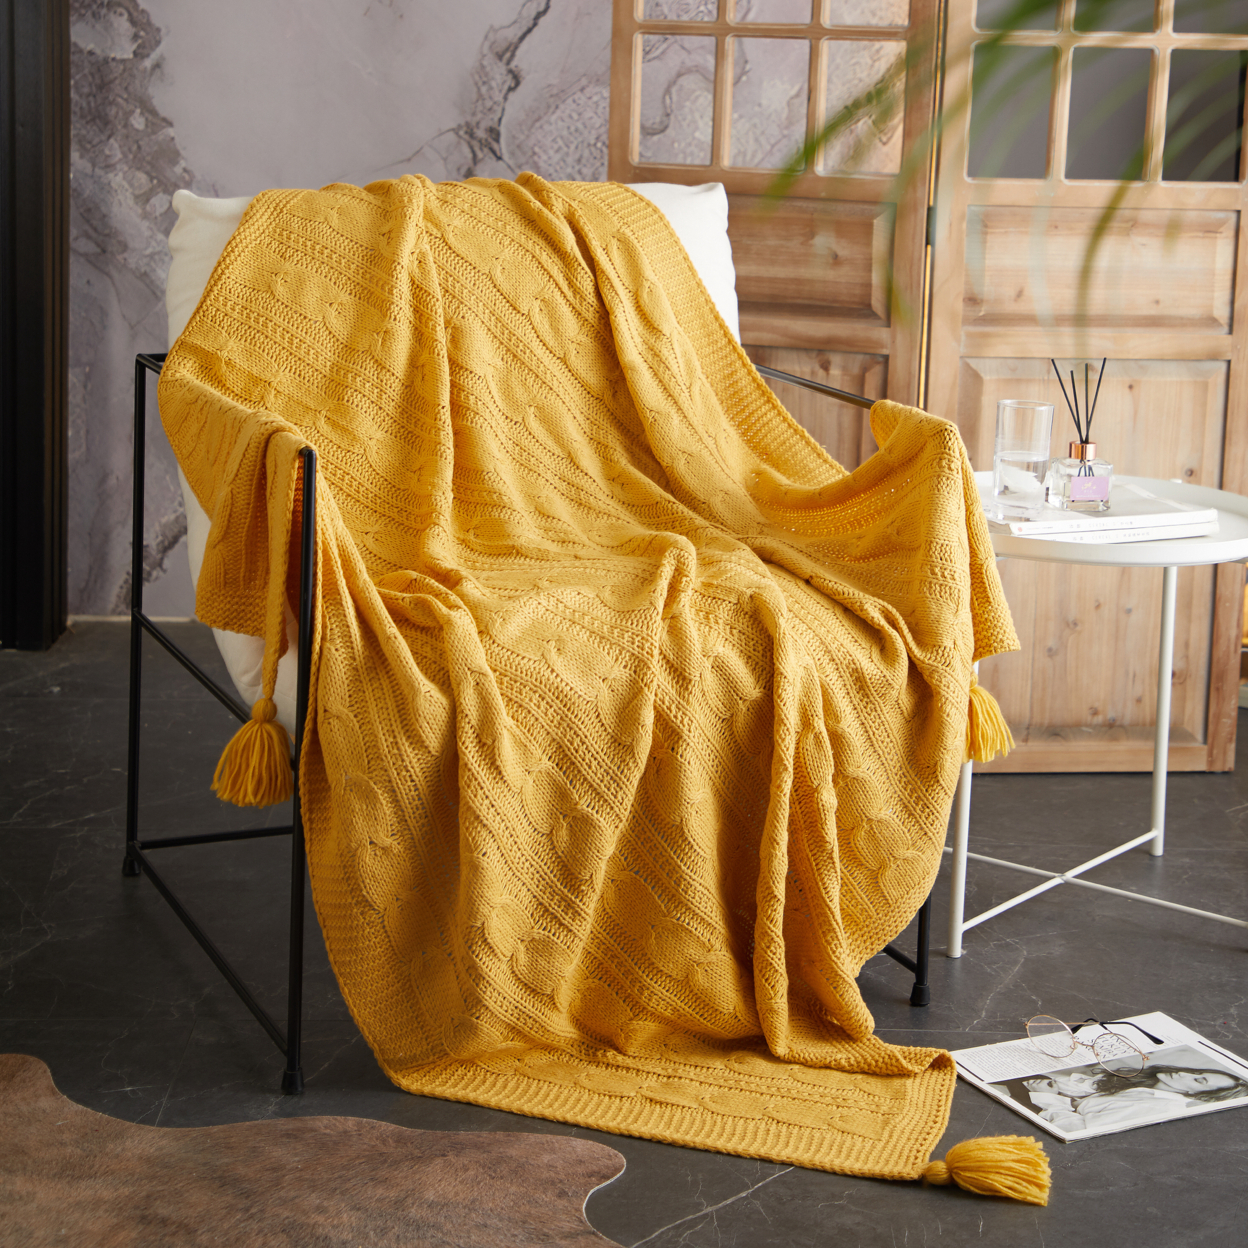 NY&C Home Dorja Knitted Throw Blanket Plush Super Soft Textured Pattern - Mustard